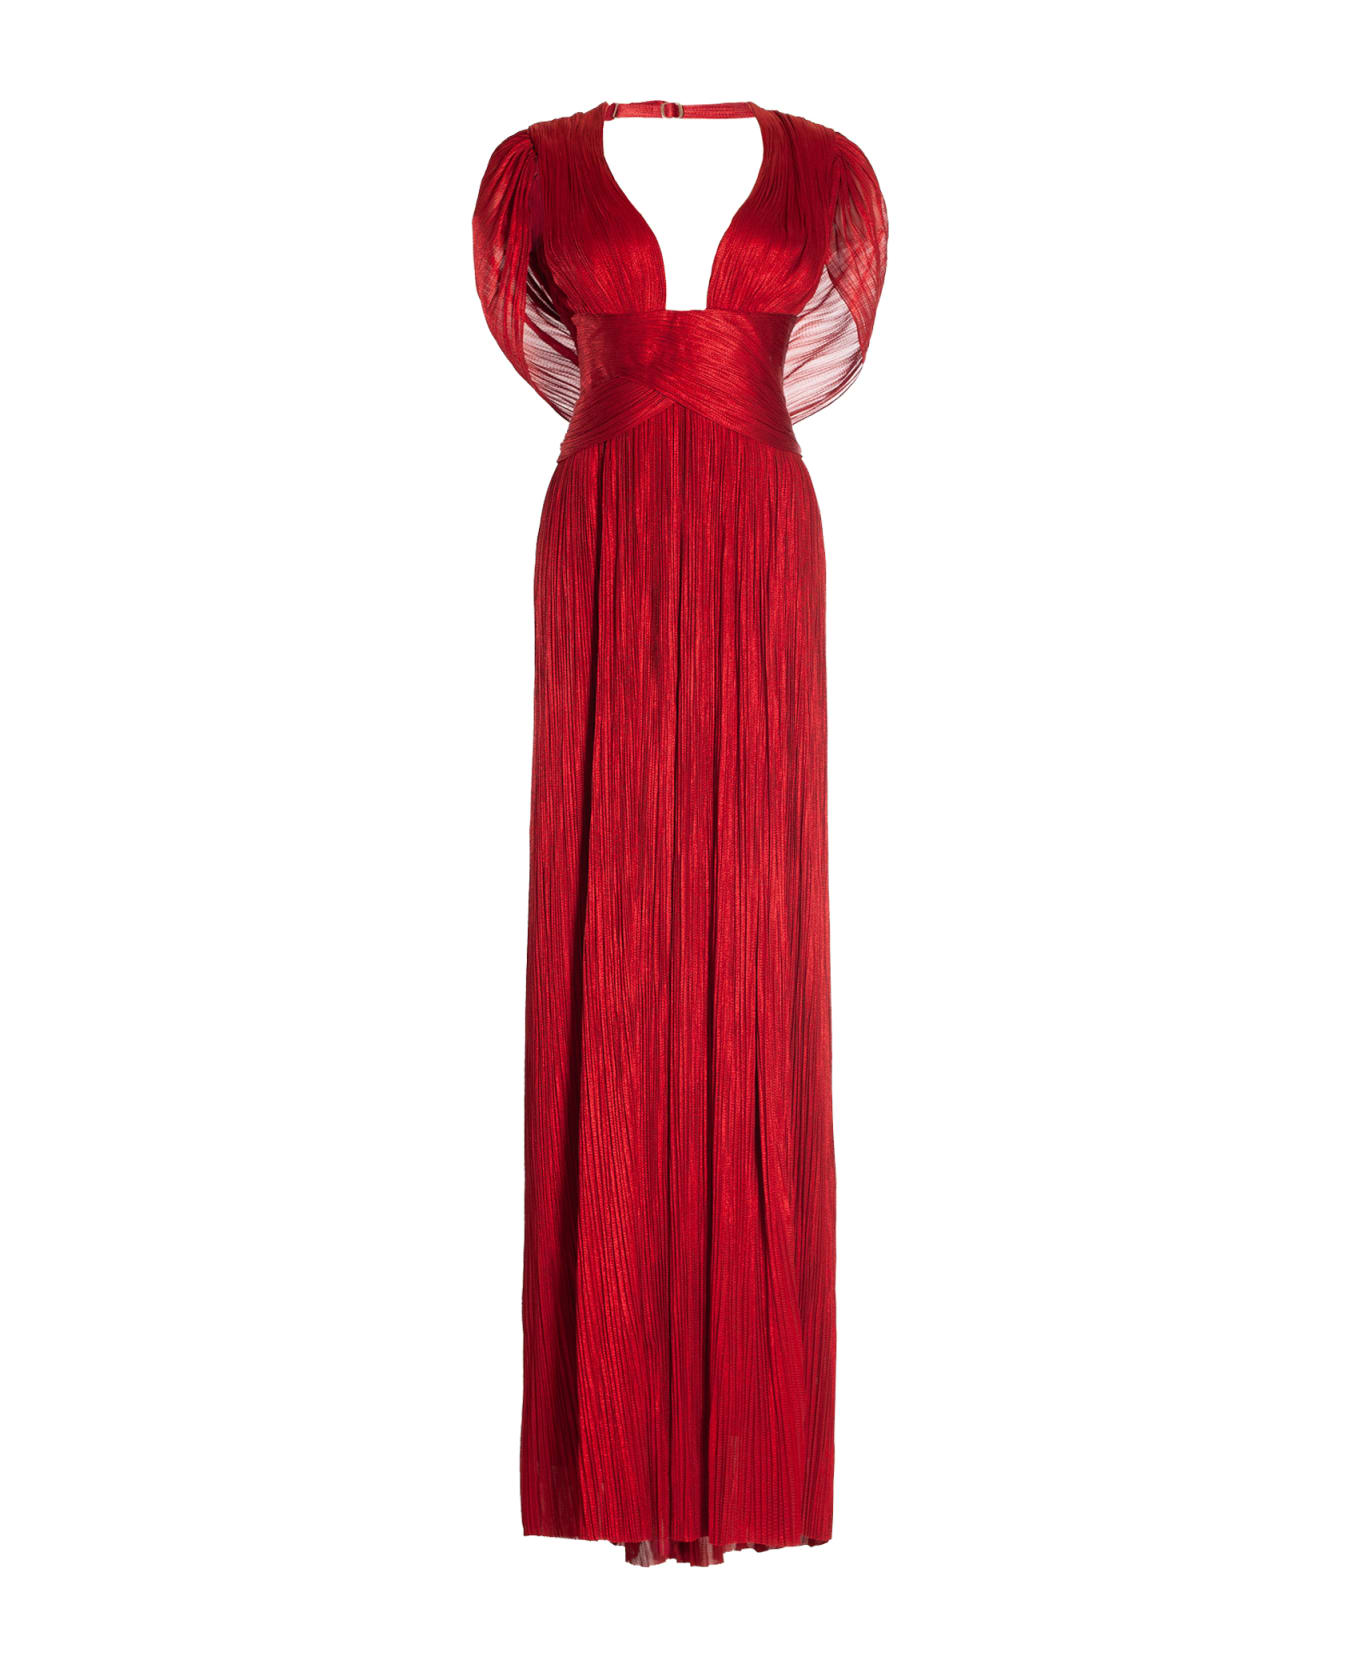 Maria Lucia Hohan Laurel Dress - Red